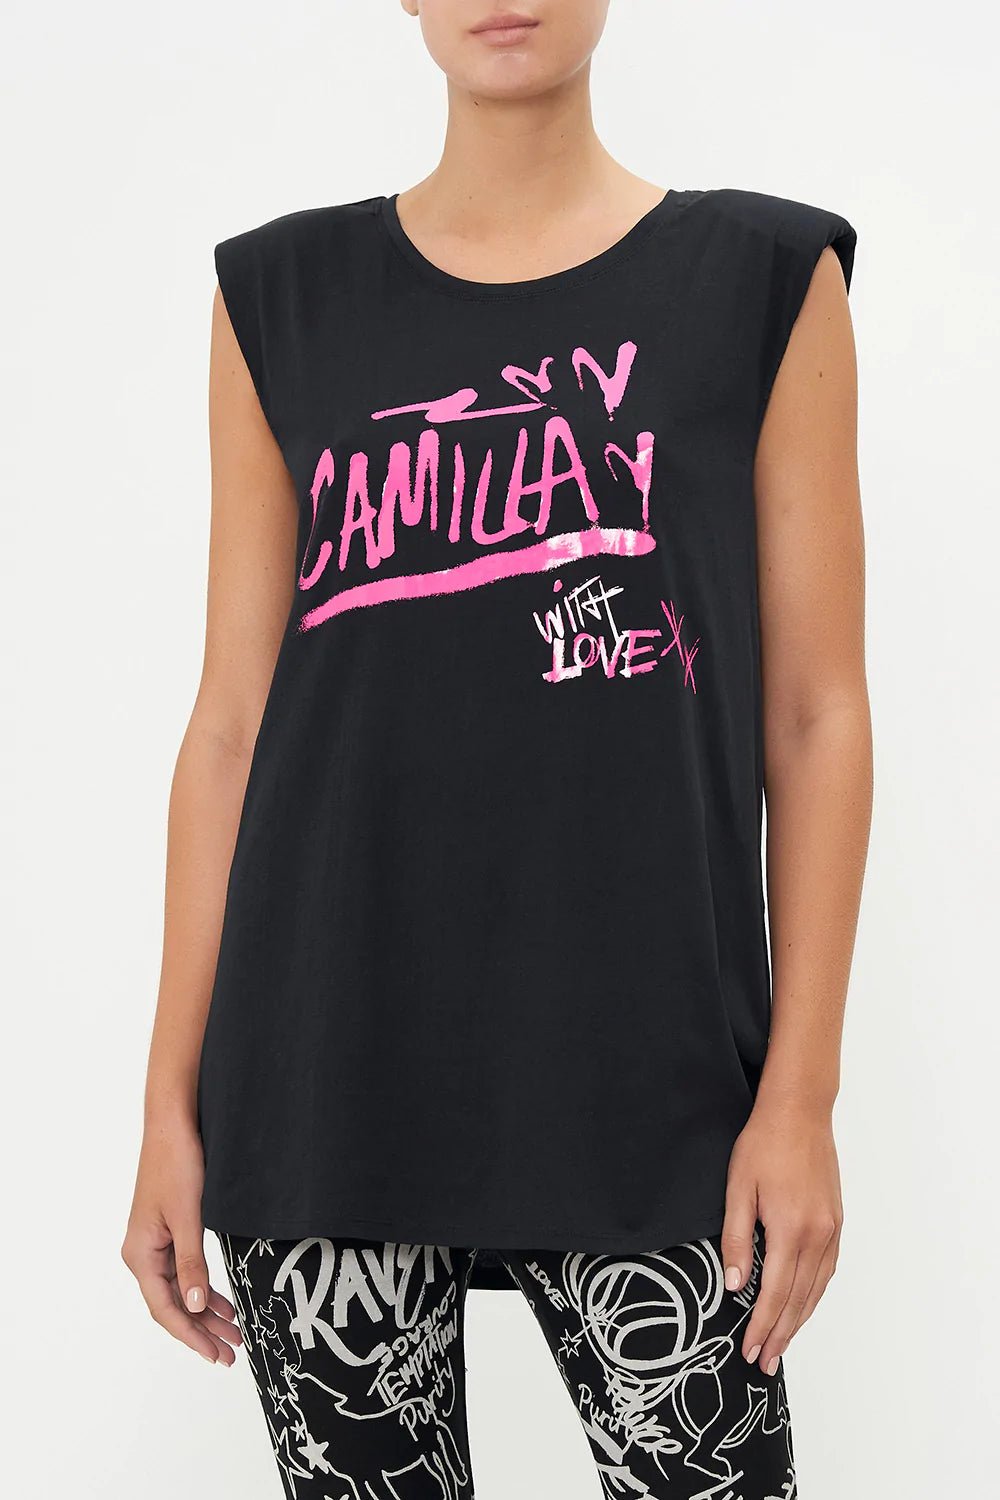 CAMILLA - Jersey Muscle Tank With Shoulder Pads Spirit Scribble - Camilla - Pinkhill - darwin fashion - darwin boutique